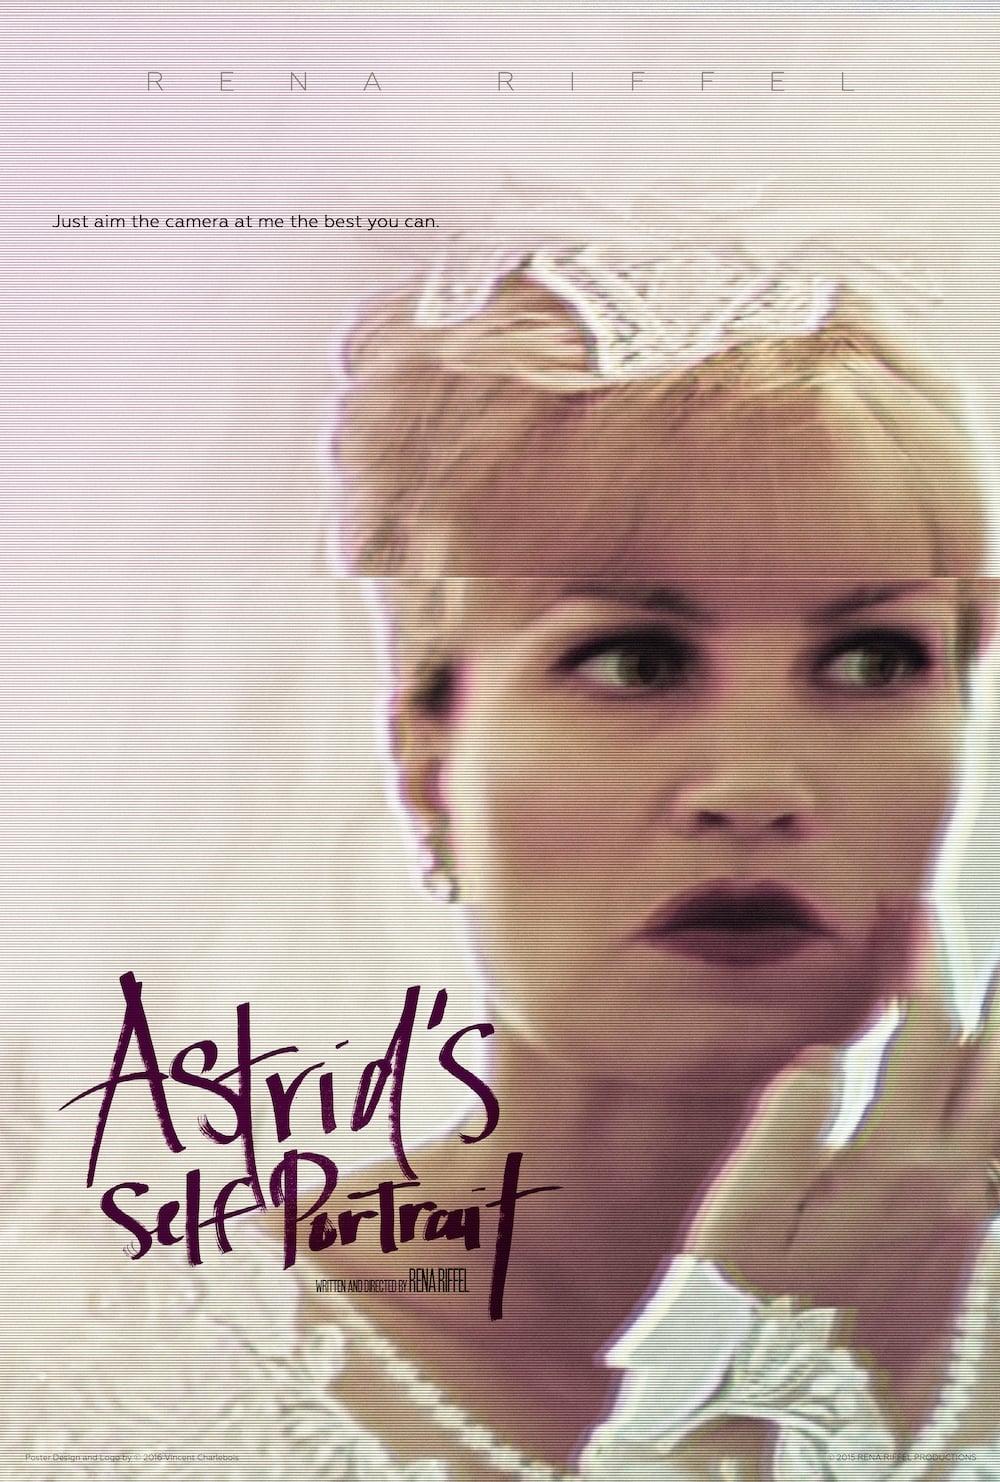 Astrid's Self Portrait poster